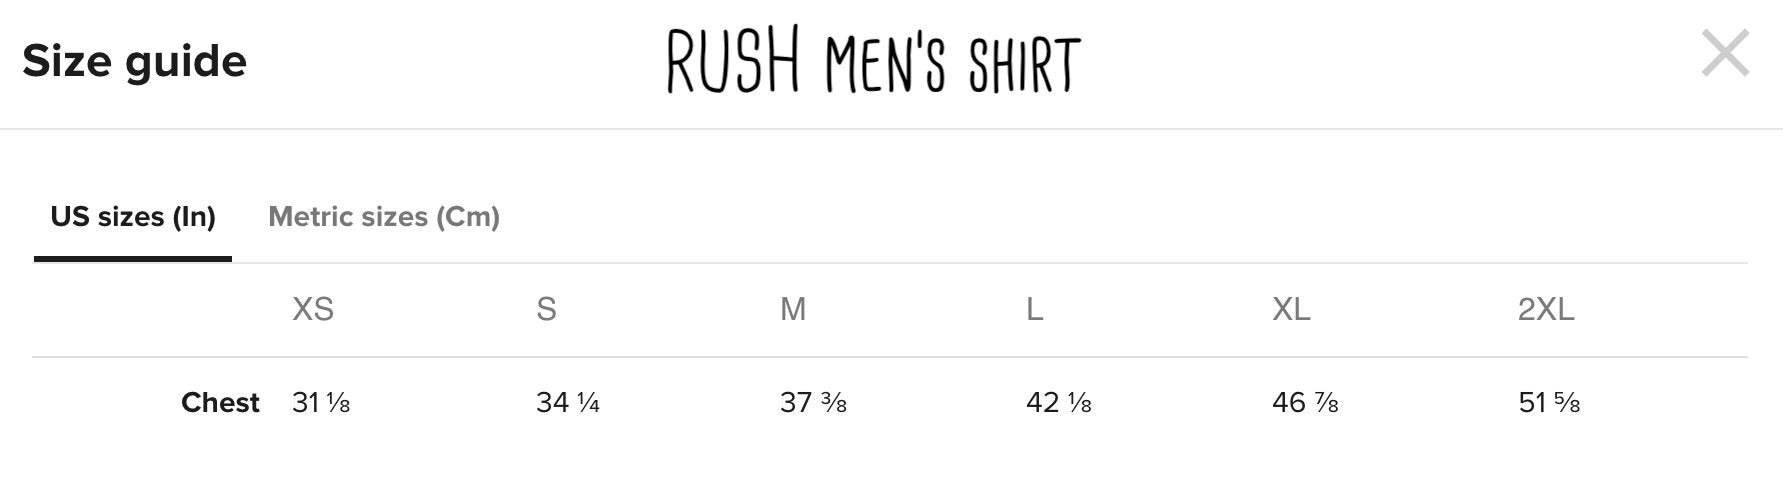 Men&#39;s Flynn Rider Tangled Inspired Shirt